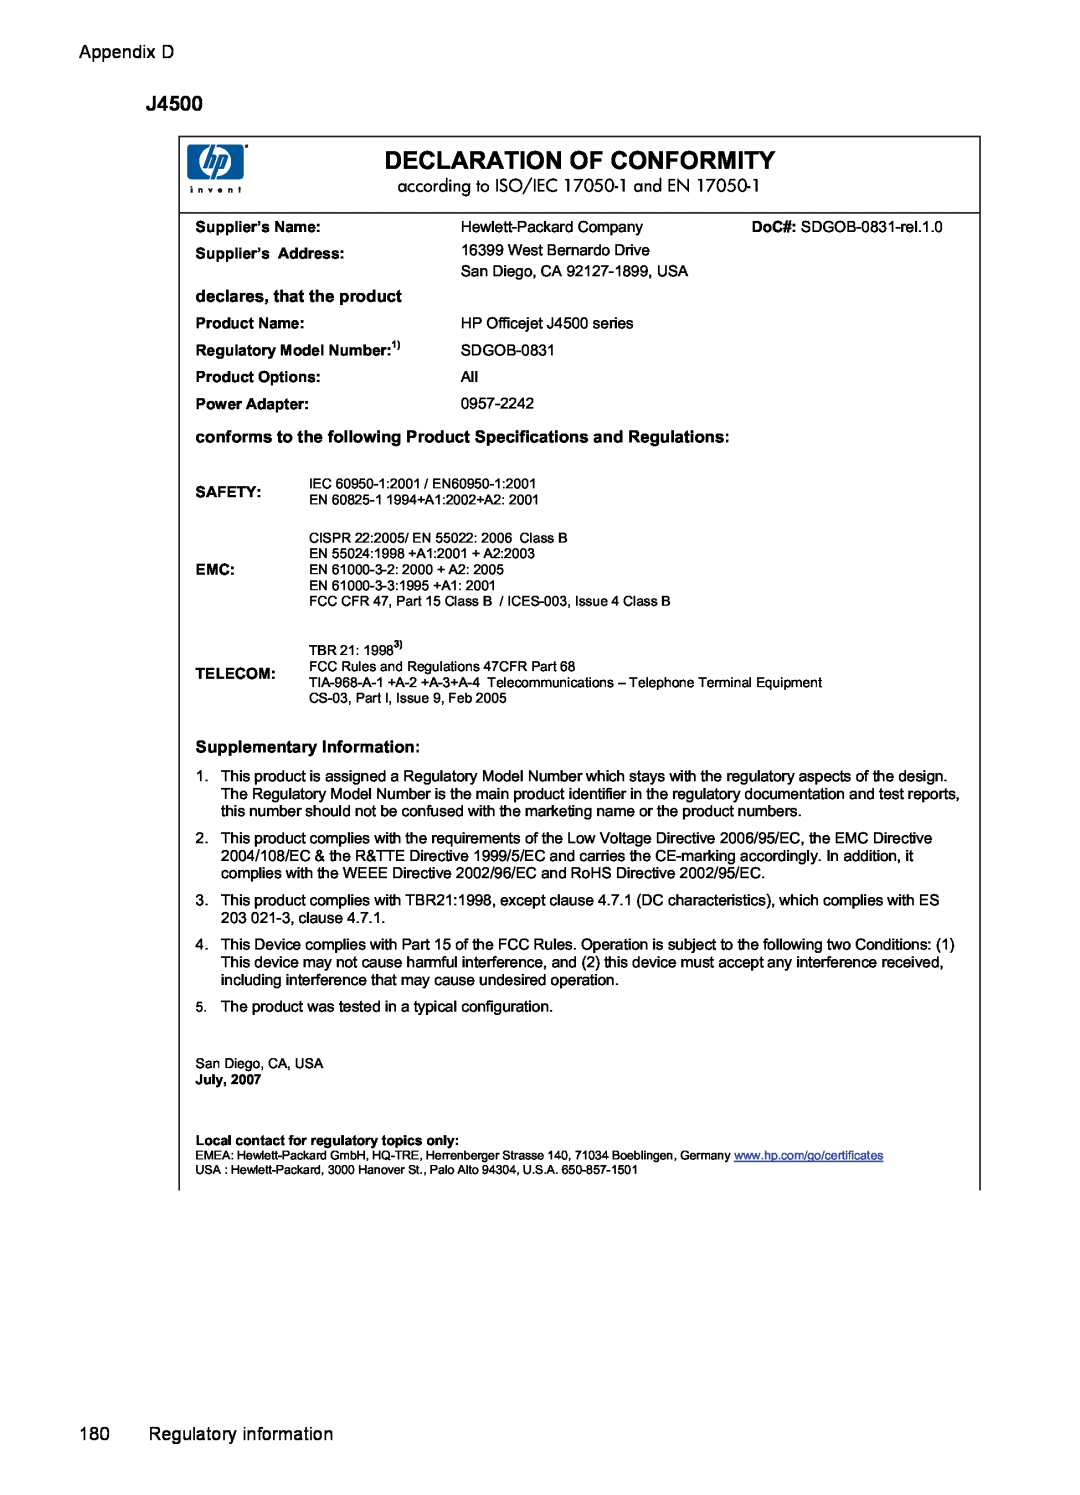 HP J4550, J4680 Declaration Of Conformity, J4500, Appendix D, Regulatory information, according to ISO/IEC 17050-1 and EN 